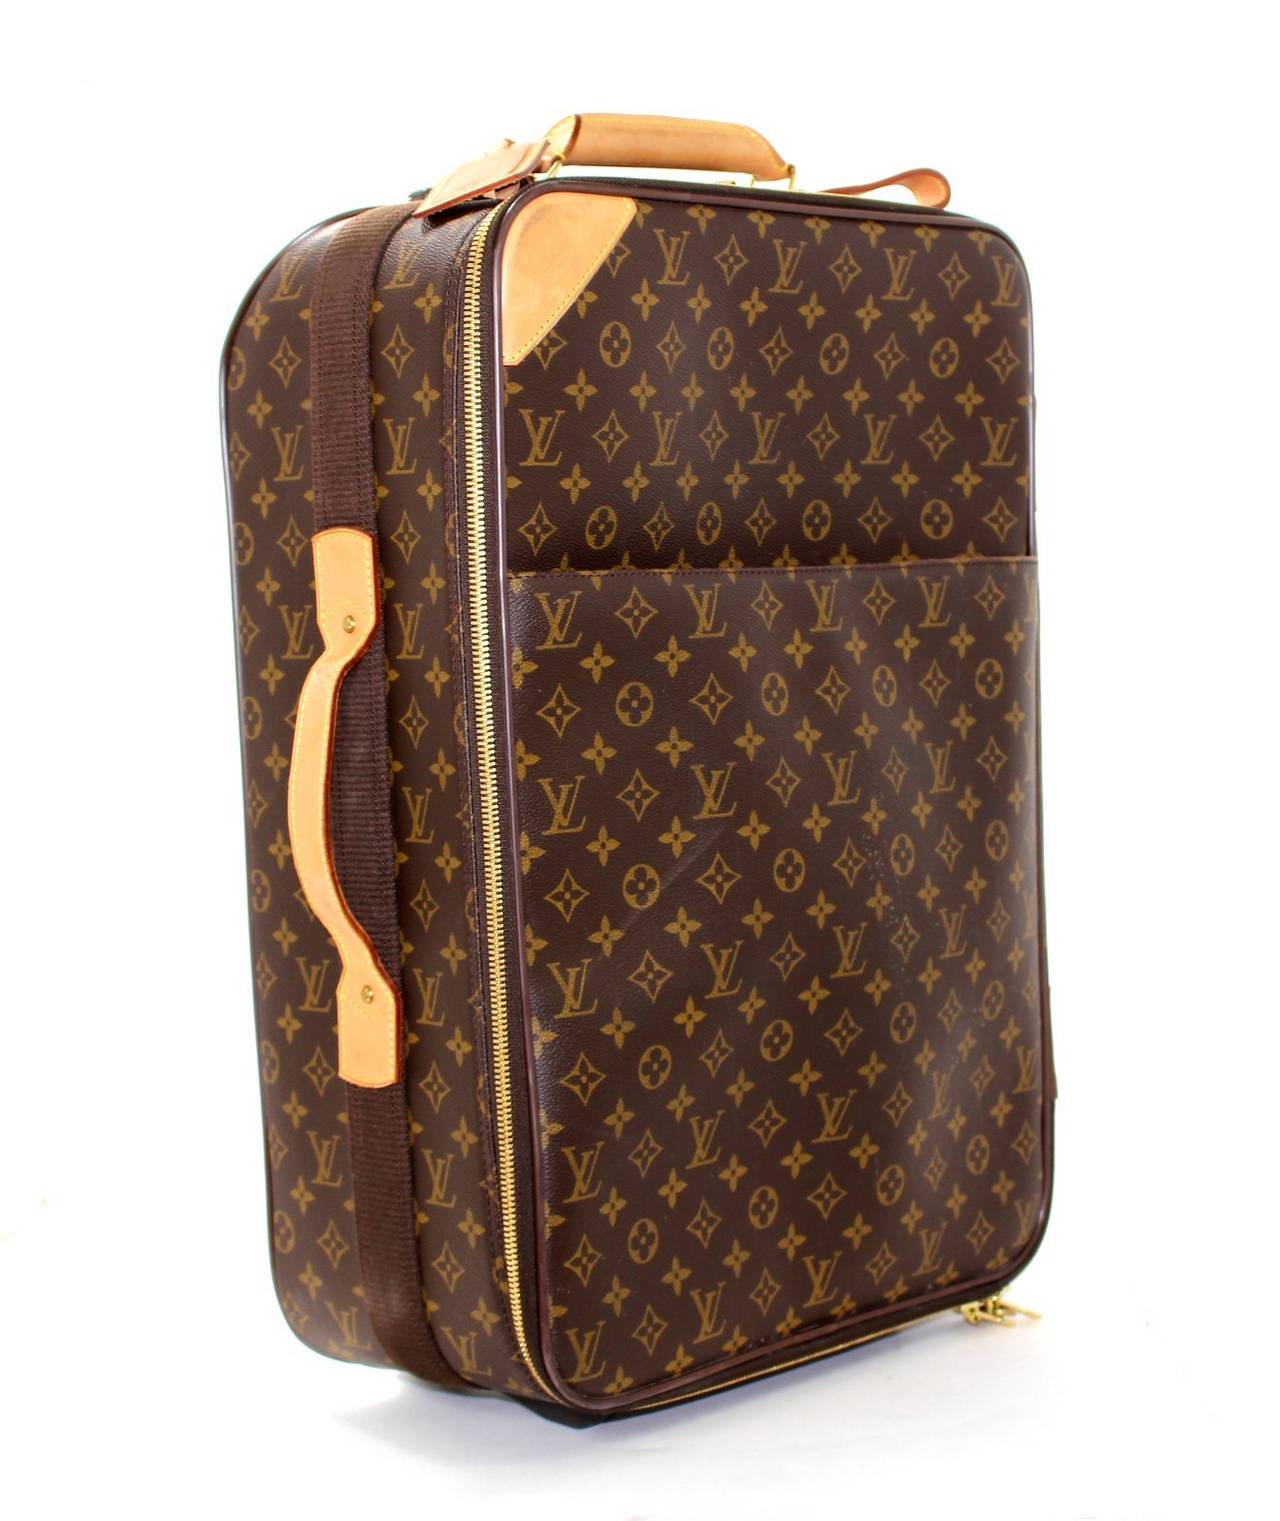 Louis Vuitton Luggage Men | SEMA Data Co-op